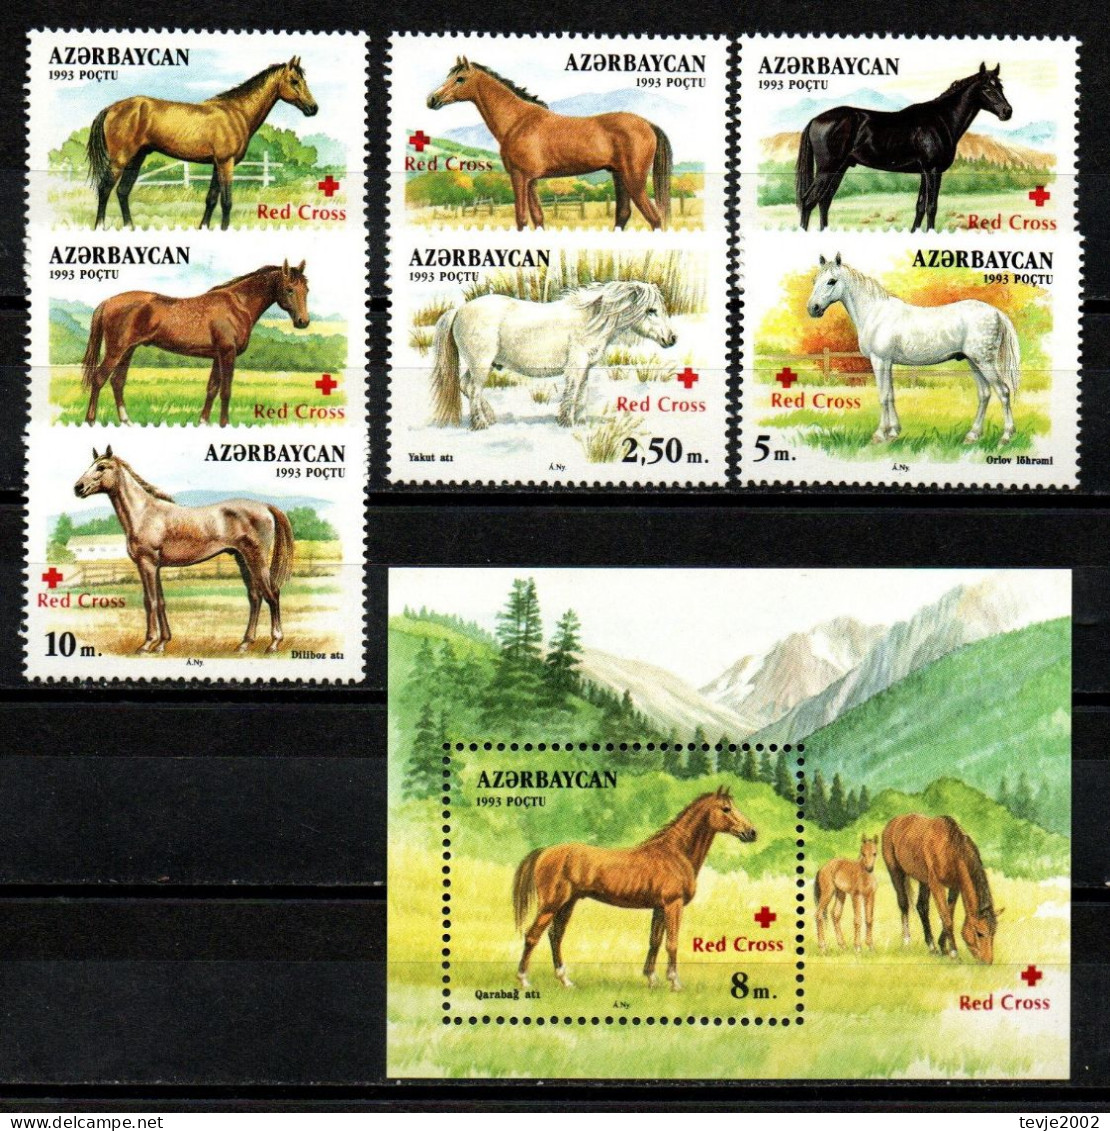 Aserbaidschan 1997 - Mi.Nr. 353 - 359 + Block 27 - Postfrisch MNH - Tiere Animals Pferde Horses Rotes Kreuz Red Cross - Azerbaïjan